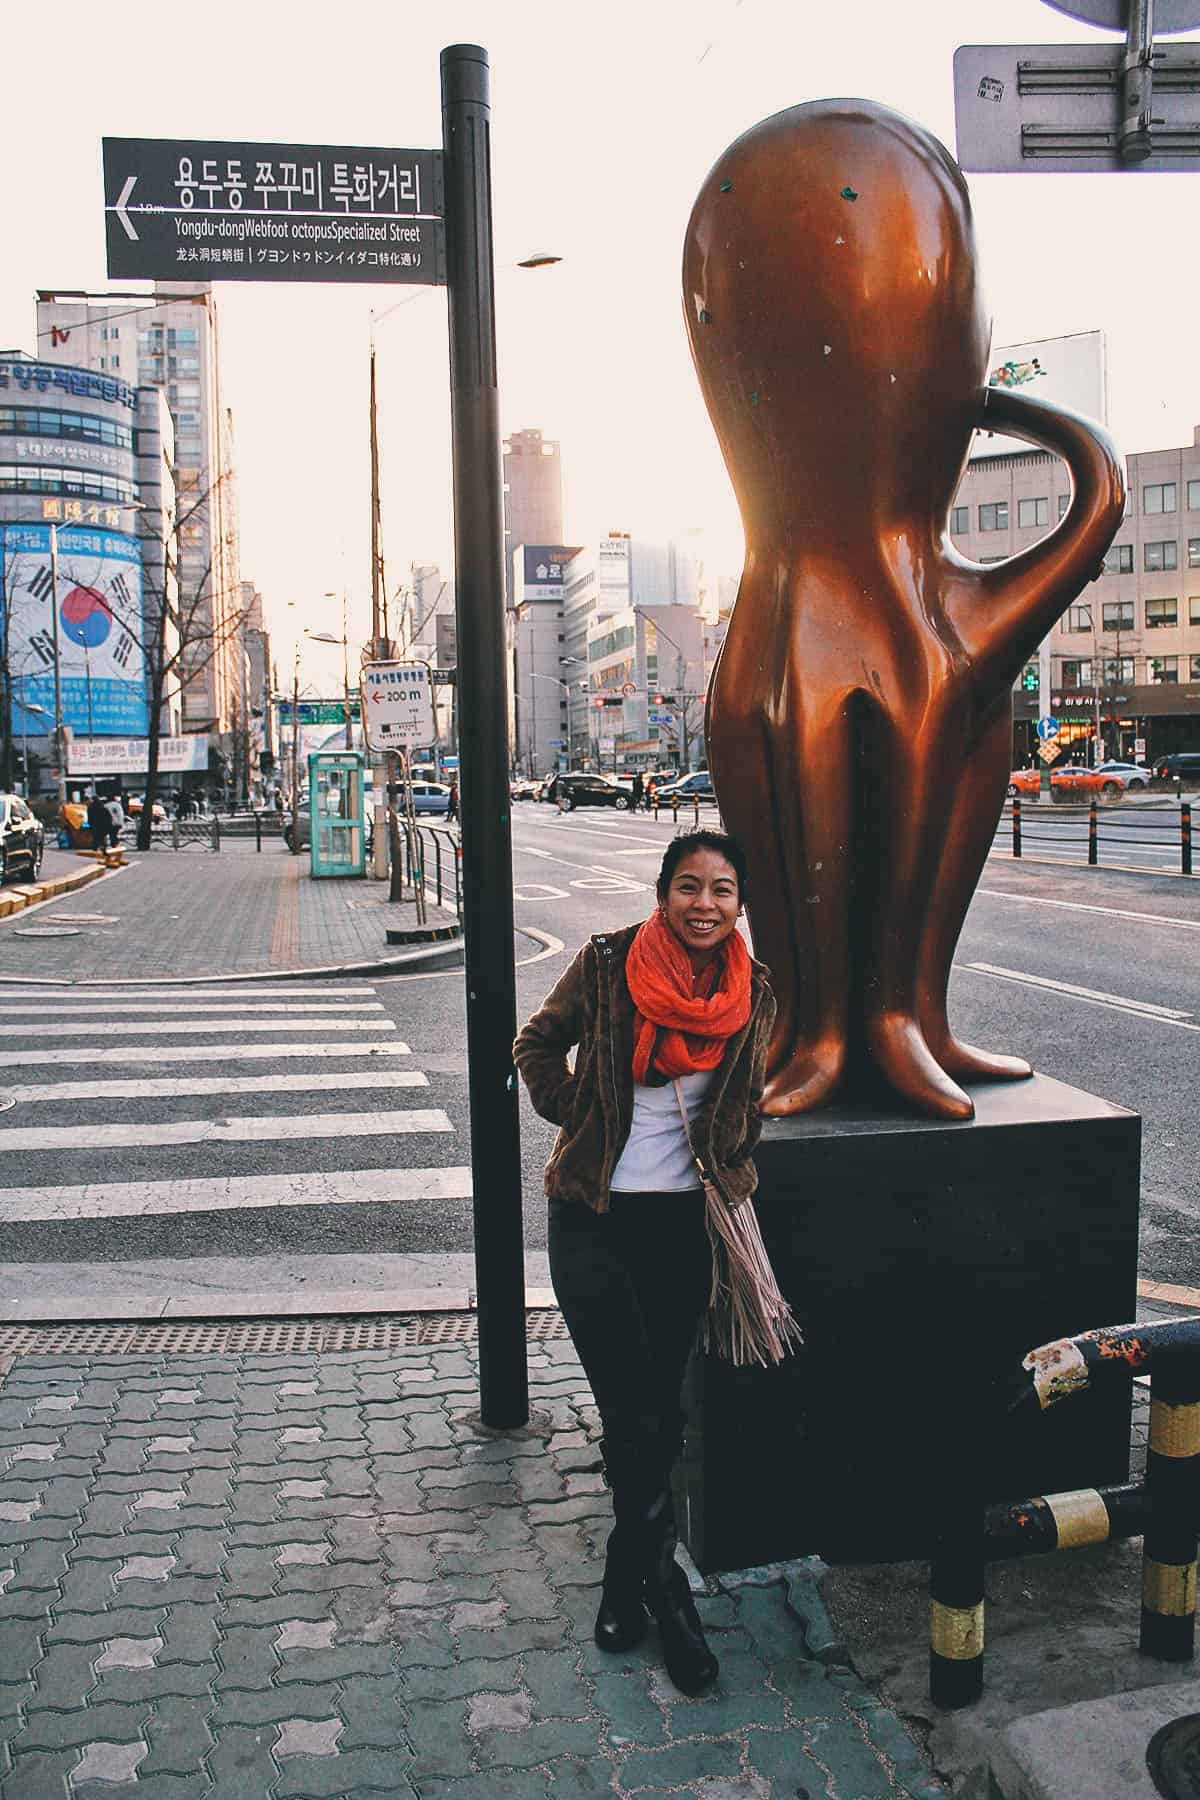 Ren posing next to the octopus statue